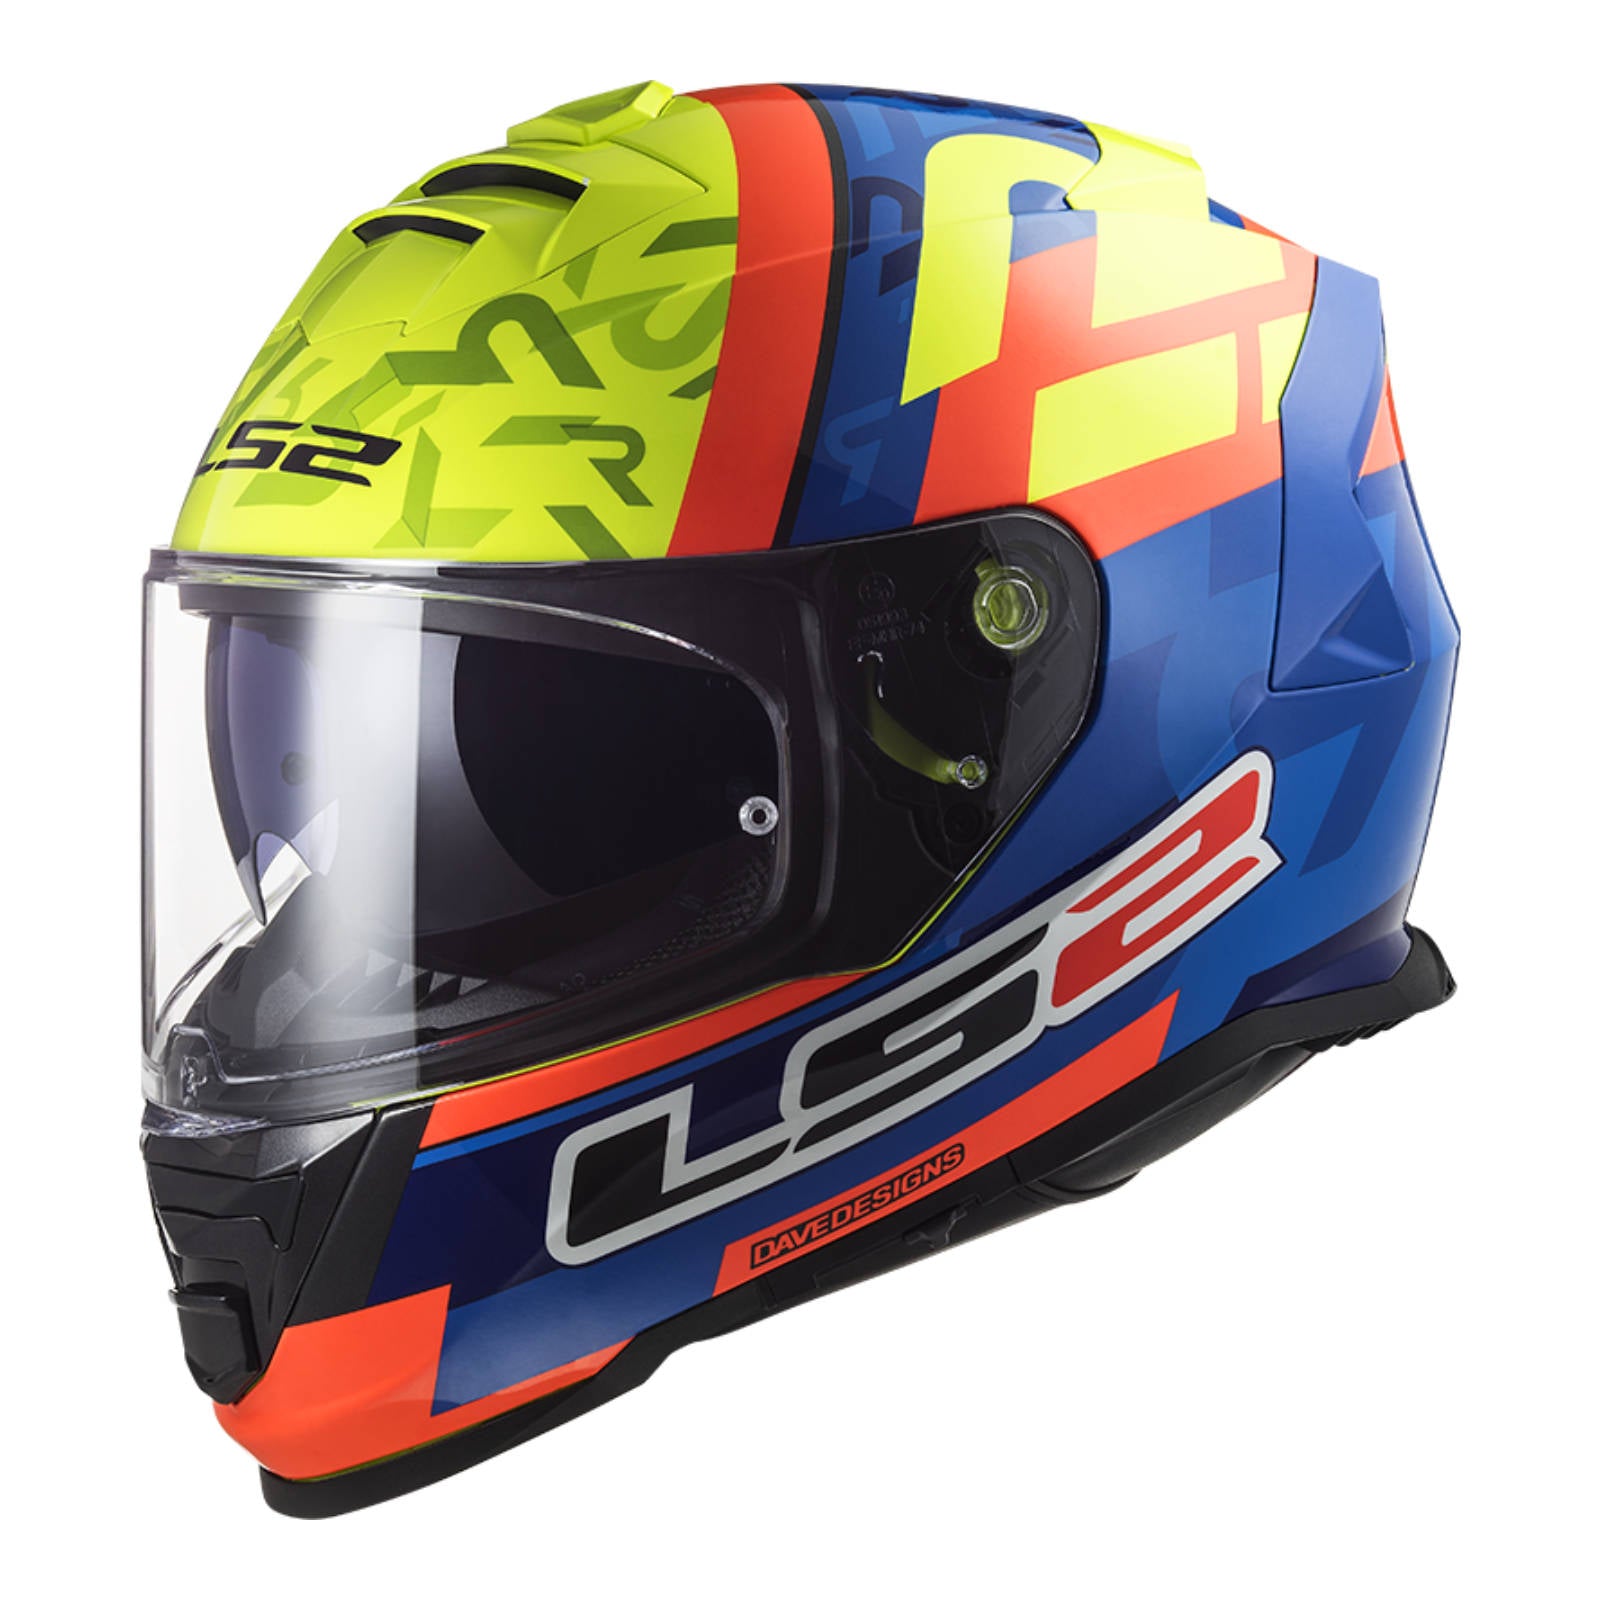 LS2 FF800 Storm Salvador Replica Helmet - Matte Yellow / Blue / Orange (S)